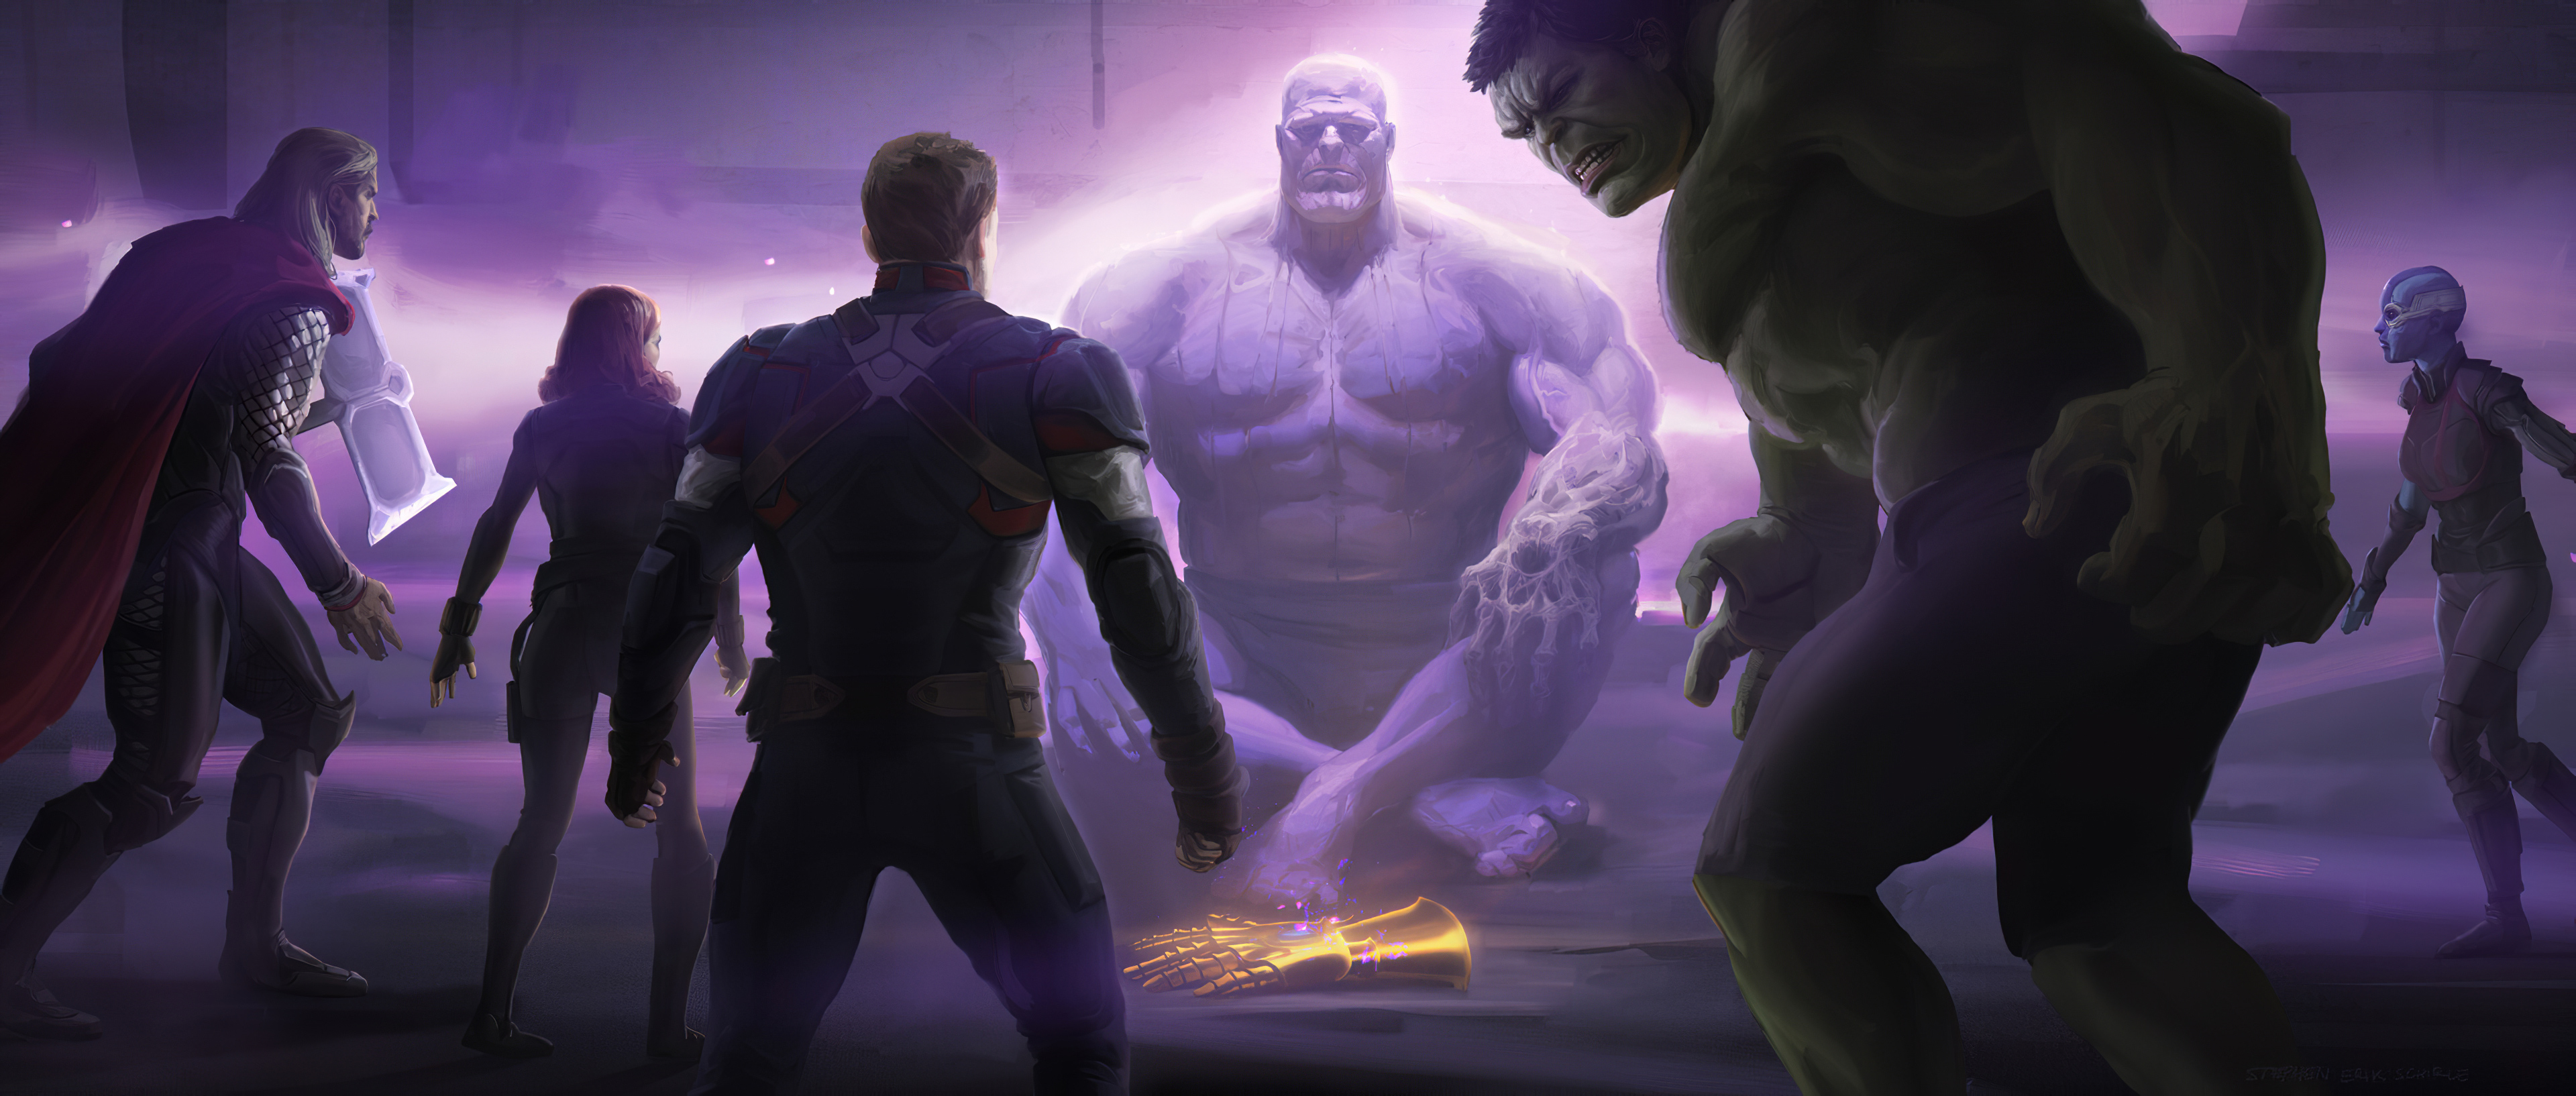 HD desktop wallpaper: Hulk, Captain America, Movie, Thor, Black Widow, The  Avengers, Thanos, Nebula (Marvel Comics), Infinity Gauntlet, Avengers  Endgame download free picture #479268